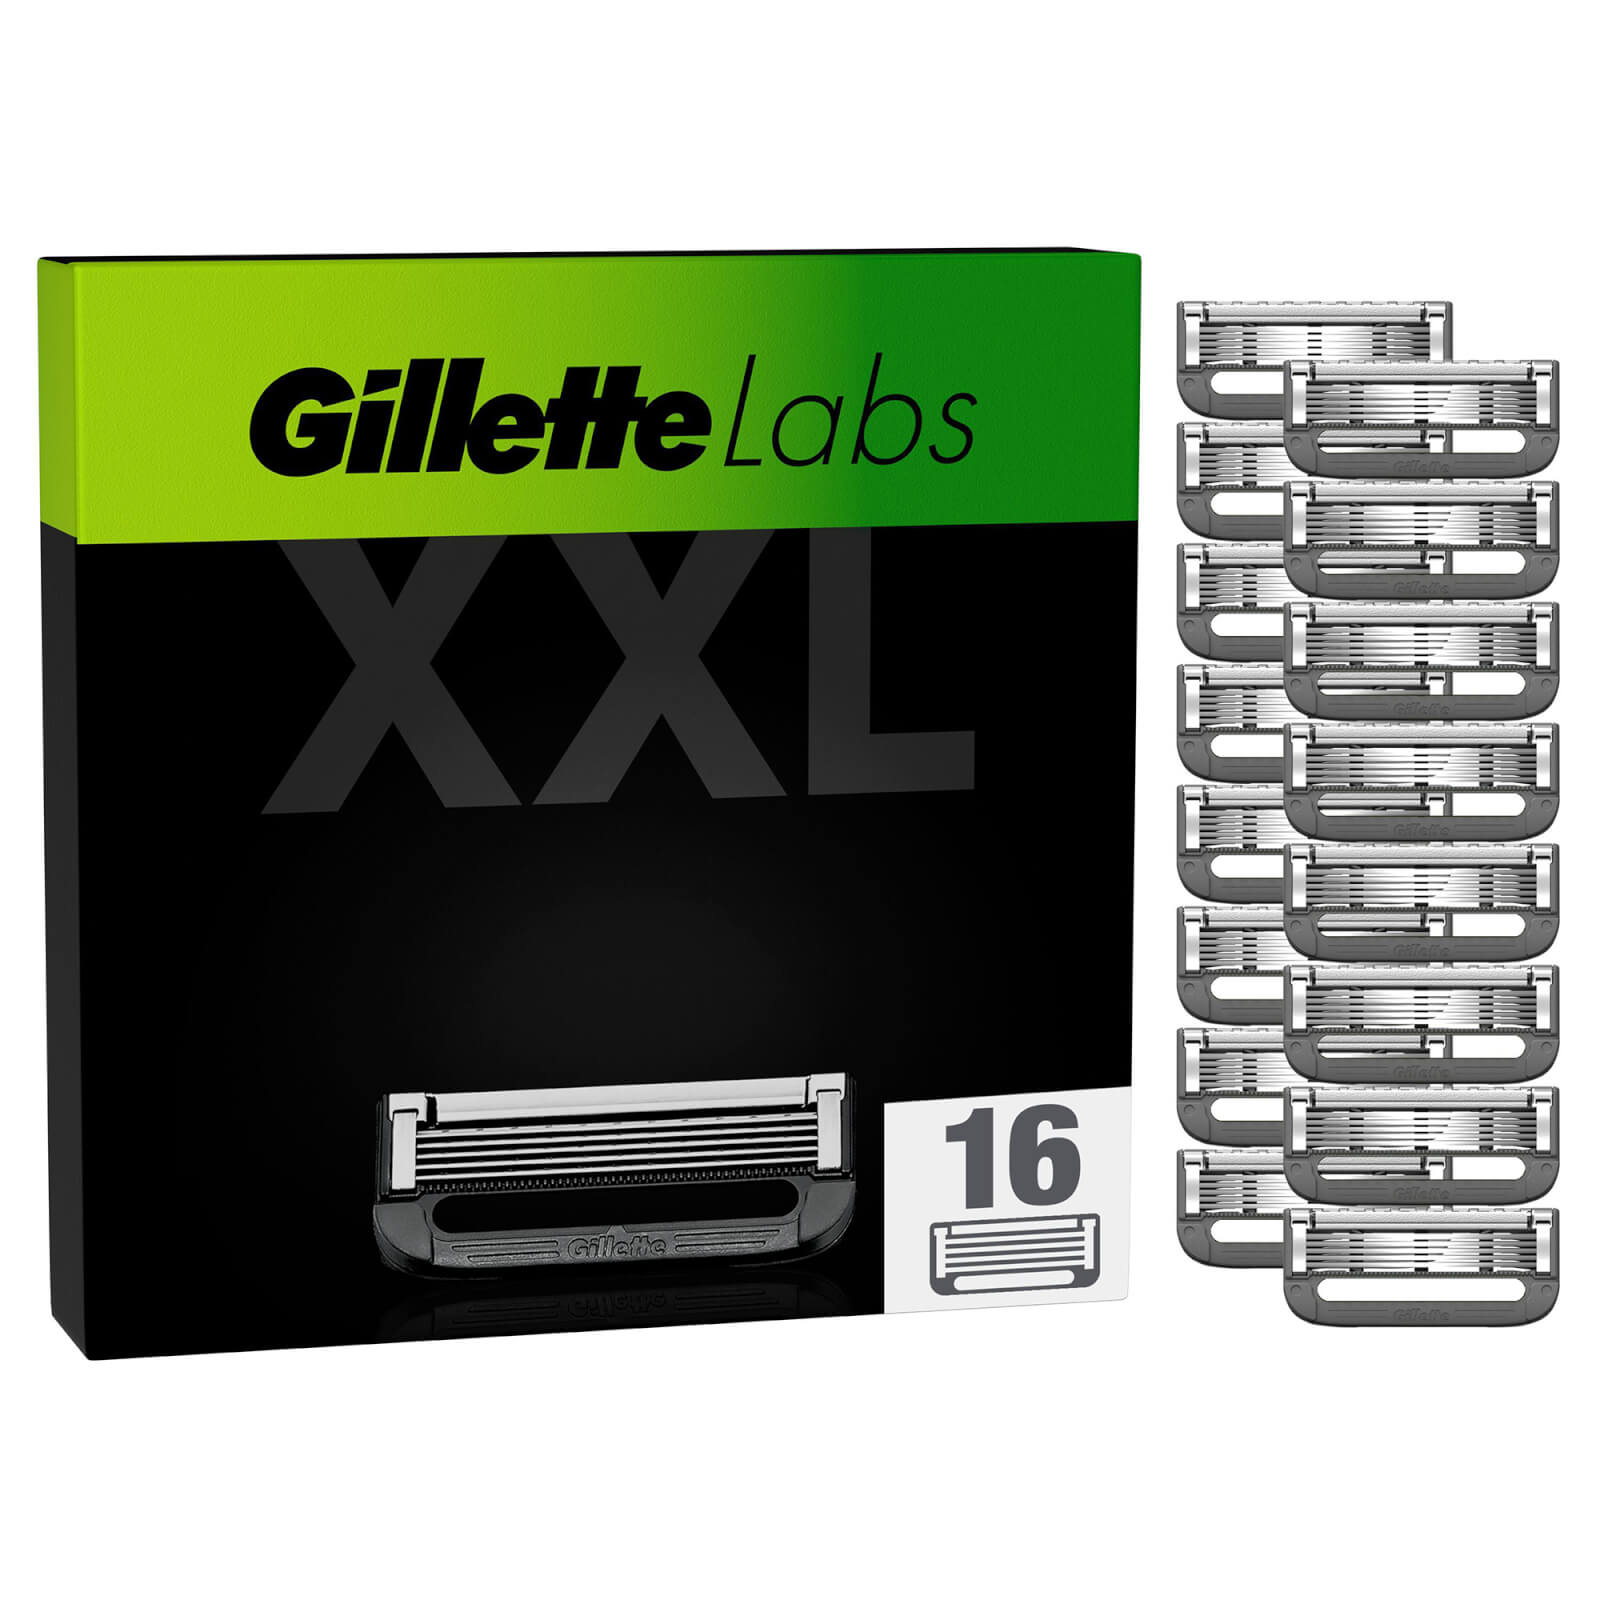 Gillette Labs Razor 16 Refill Blades Value Pack